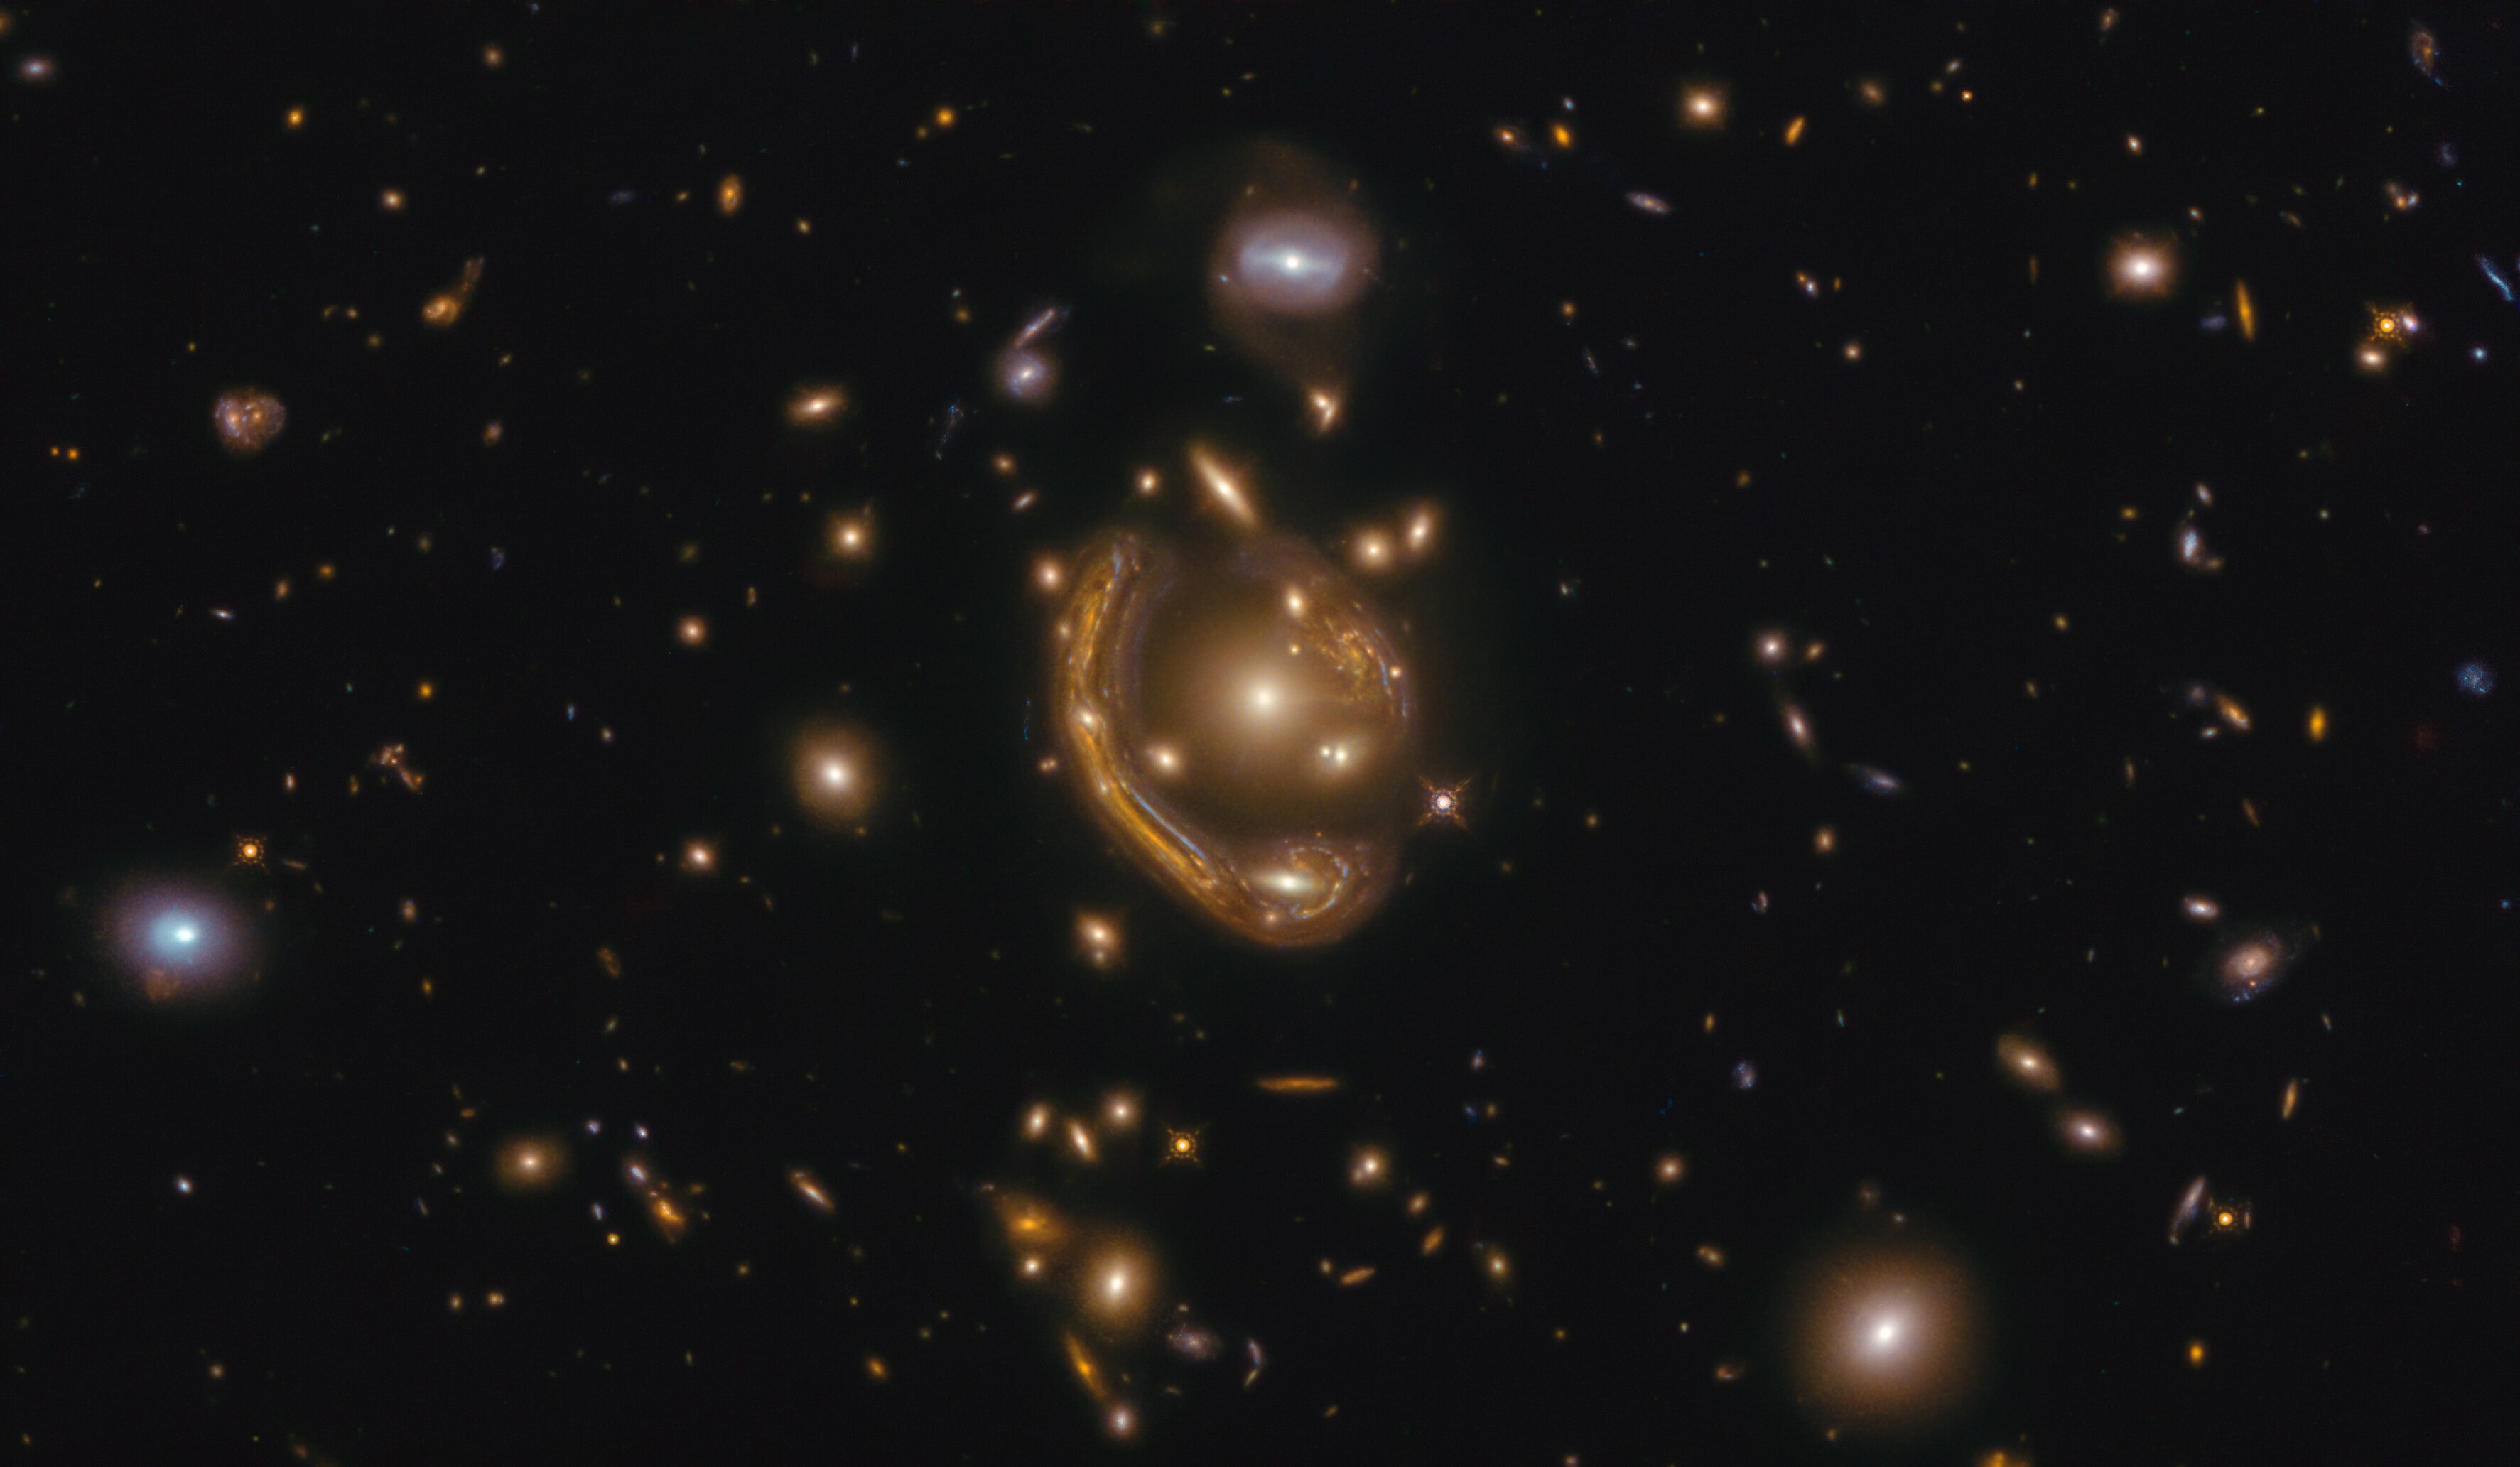 Hubble registra o maior episódio de Einstein já observado no universo (Imagem: ESA / Hubble / NASA, S. Jha)